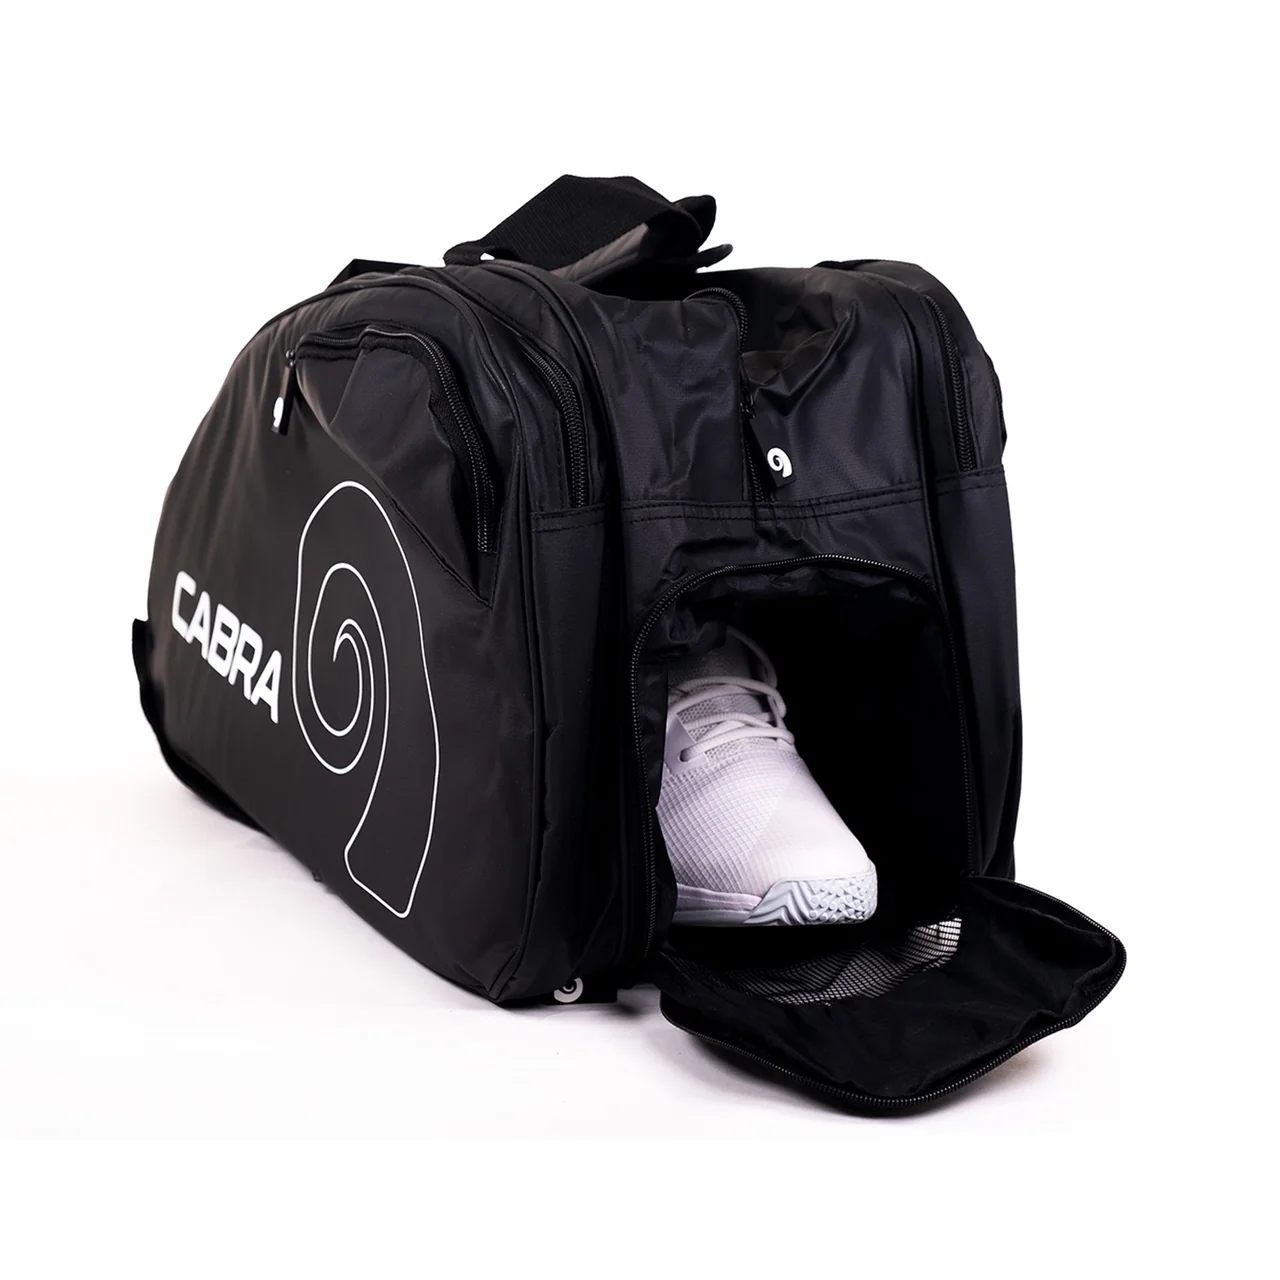 Cabra Luxury Bag Black/White